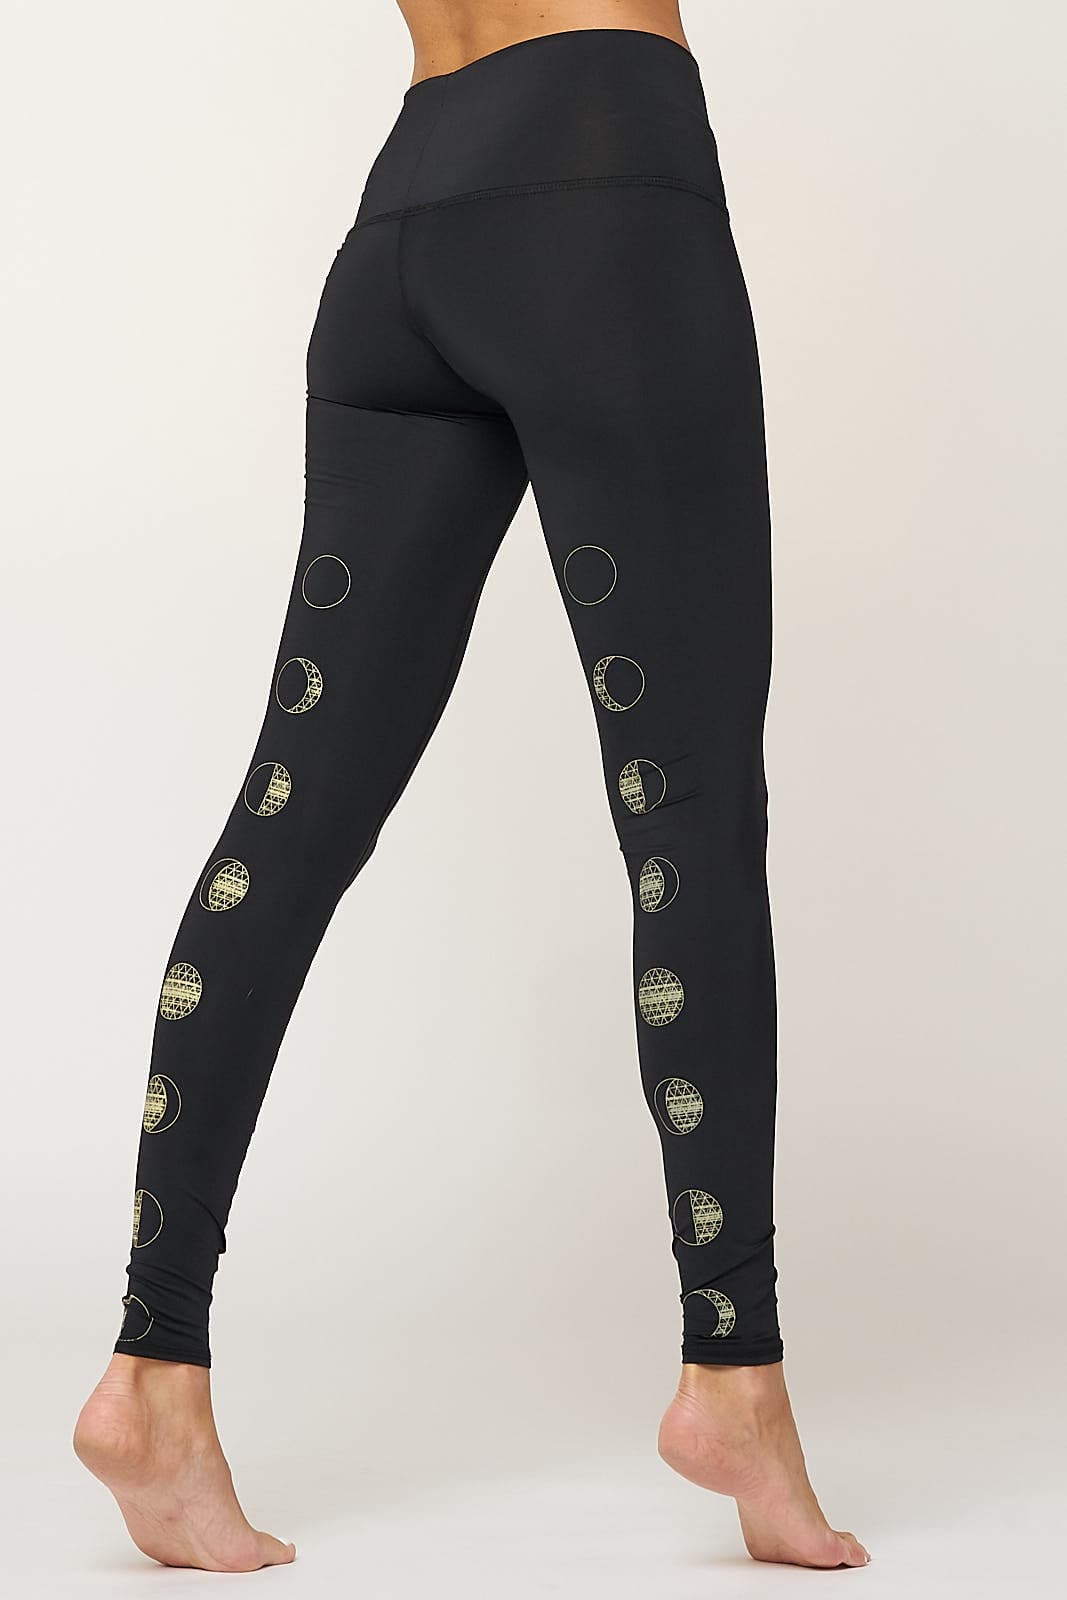 teeki Black Moon Yoga Hot Pants, Black (Medium) : : Fashion